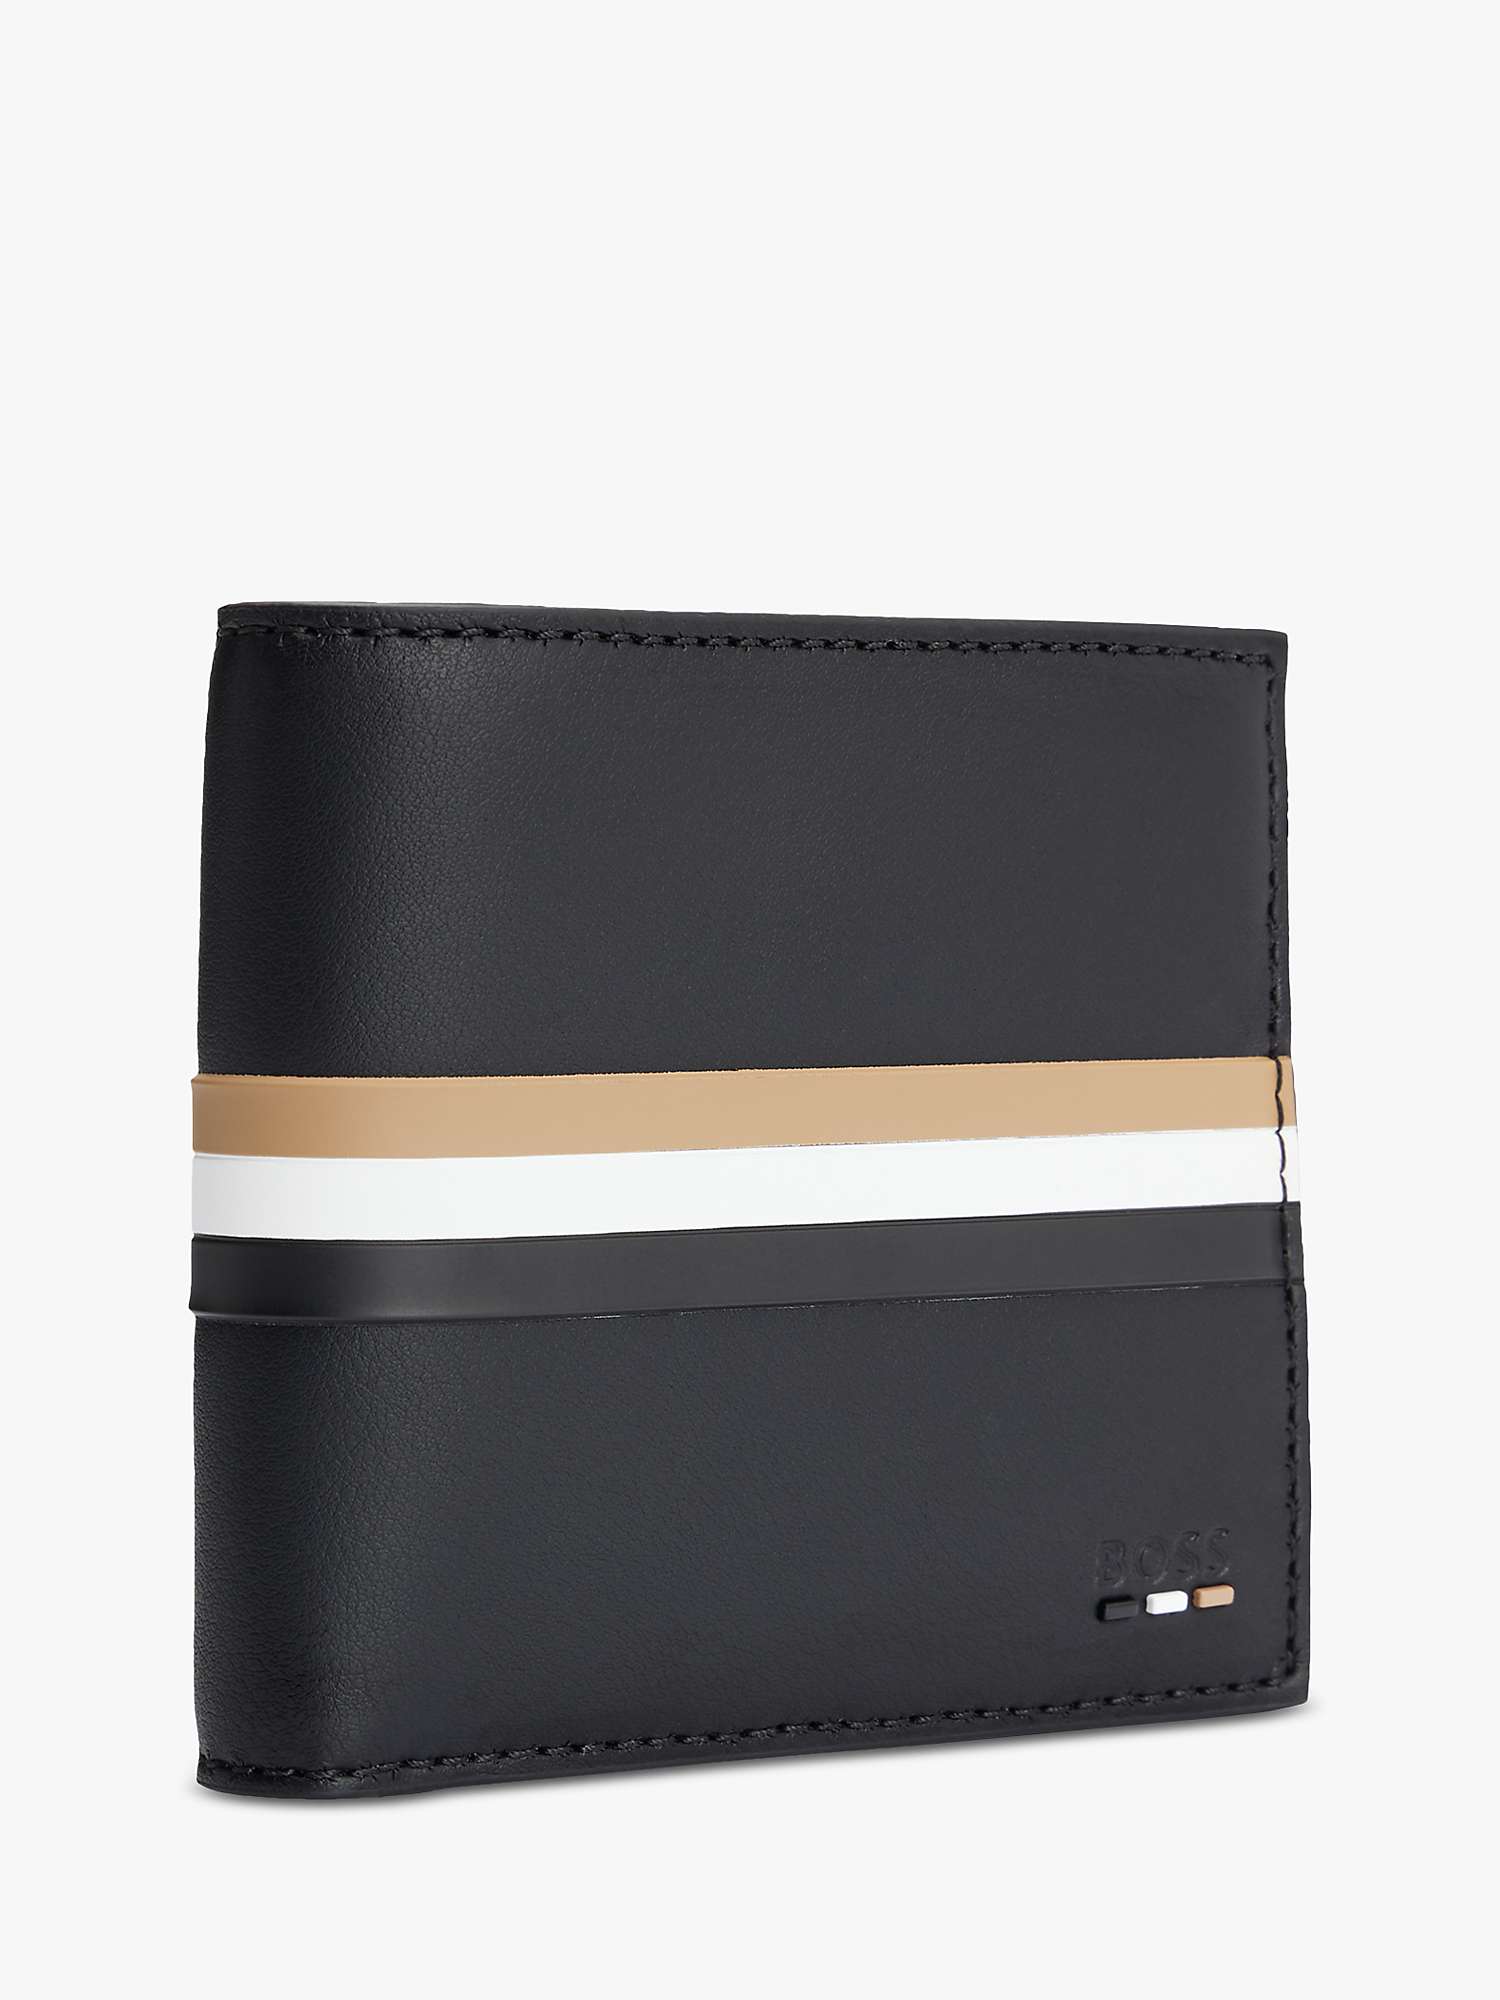 Buy BOSS Faux Leather Signature Stripe Wallet, Black/Multi Online at johnlewis.com